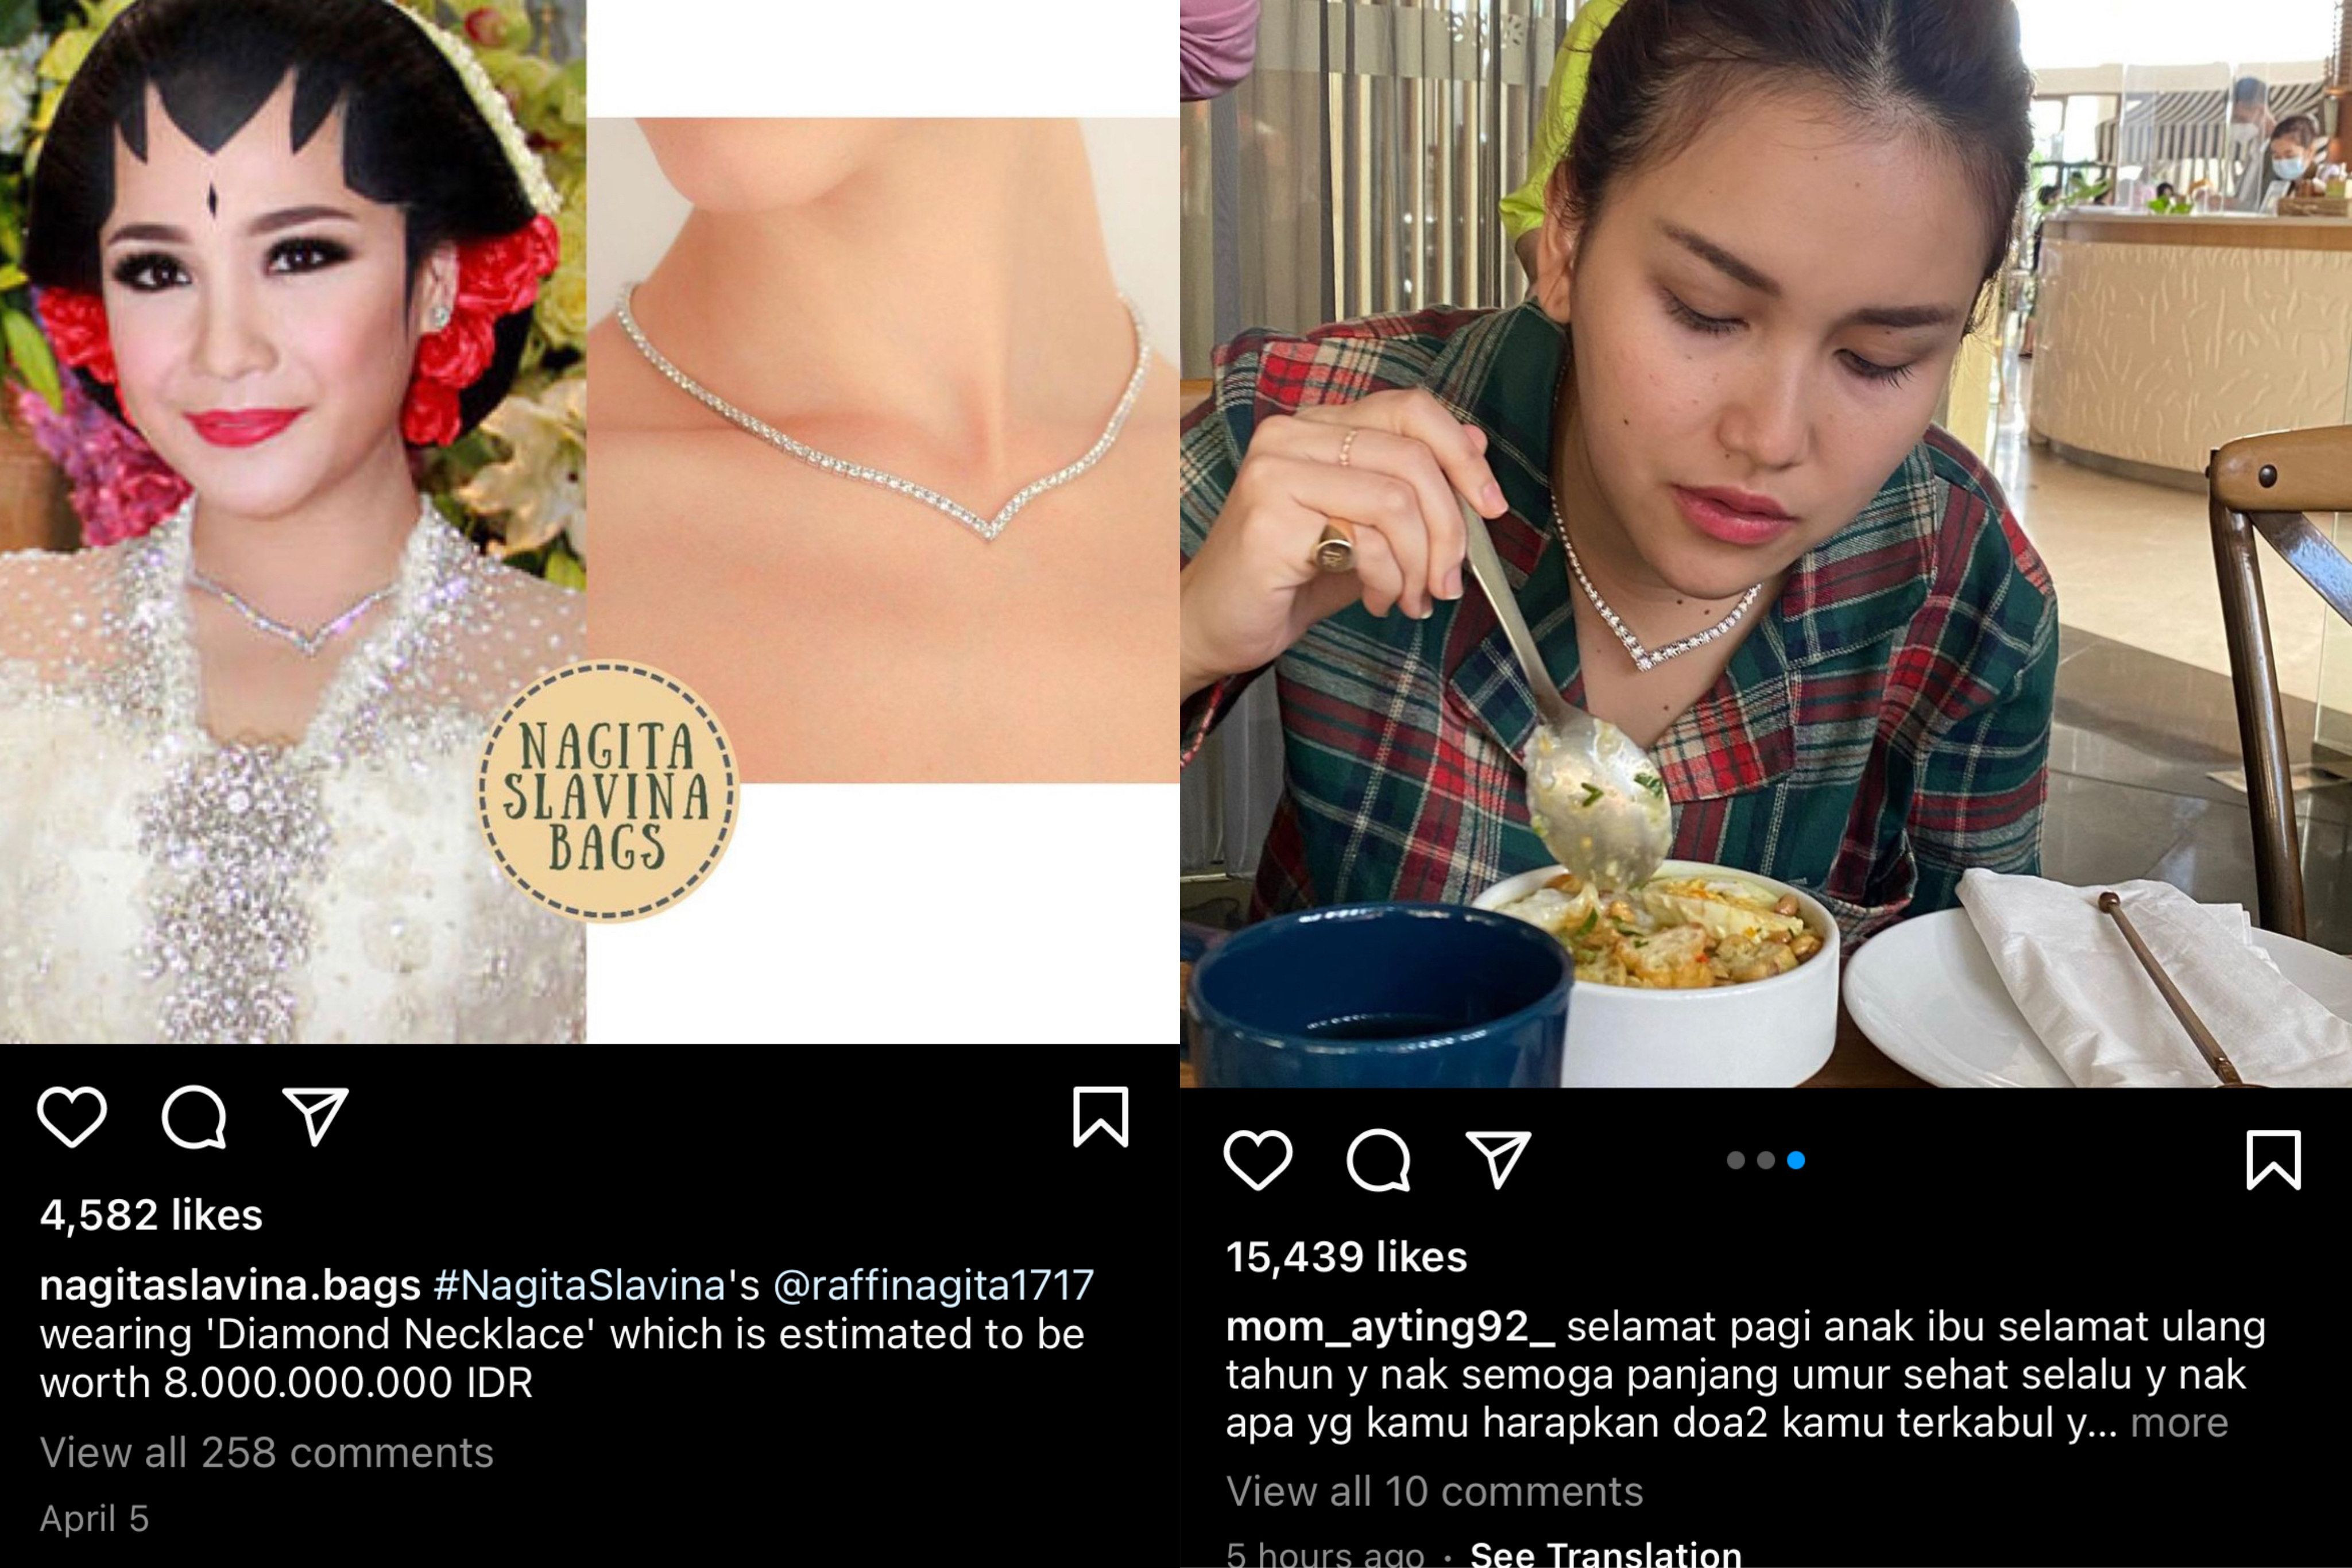 Postingan yang menunjukkan Ayu Ting Ting memakai kalung yang sama dengan Nagita Slavina.